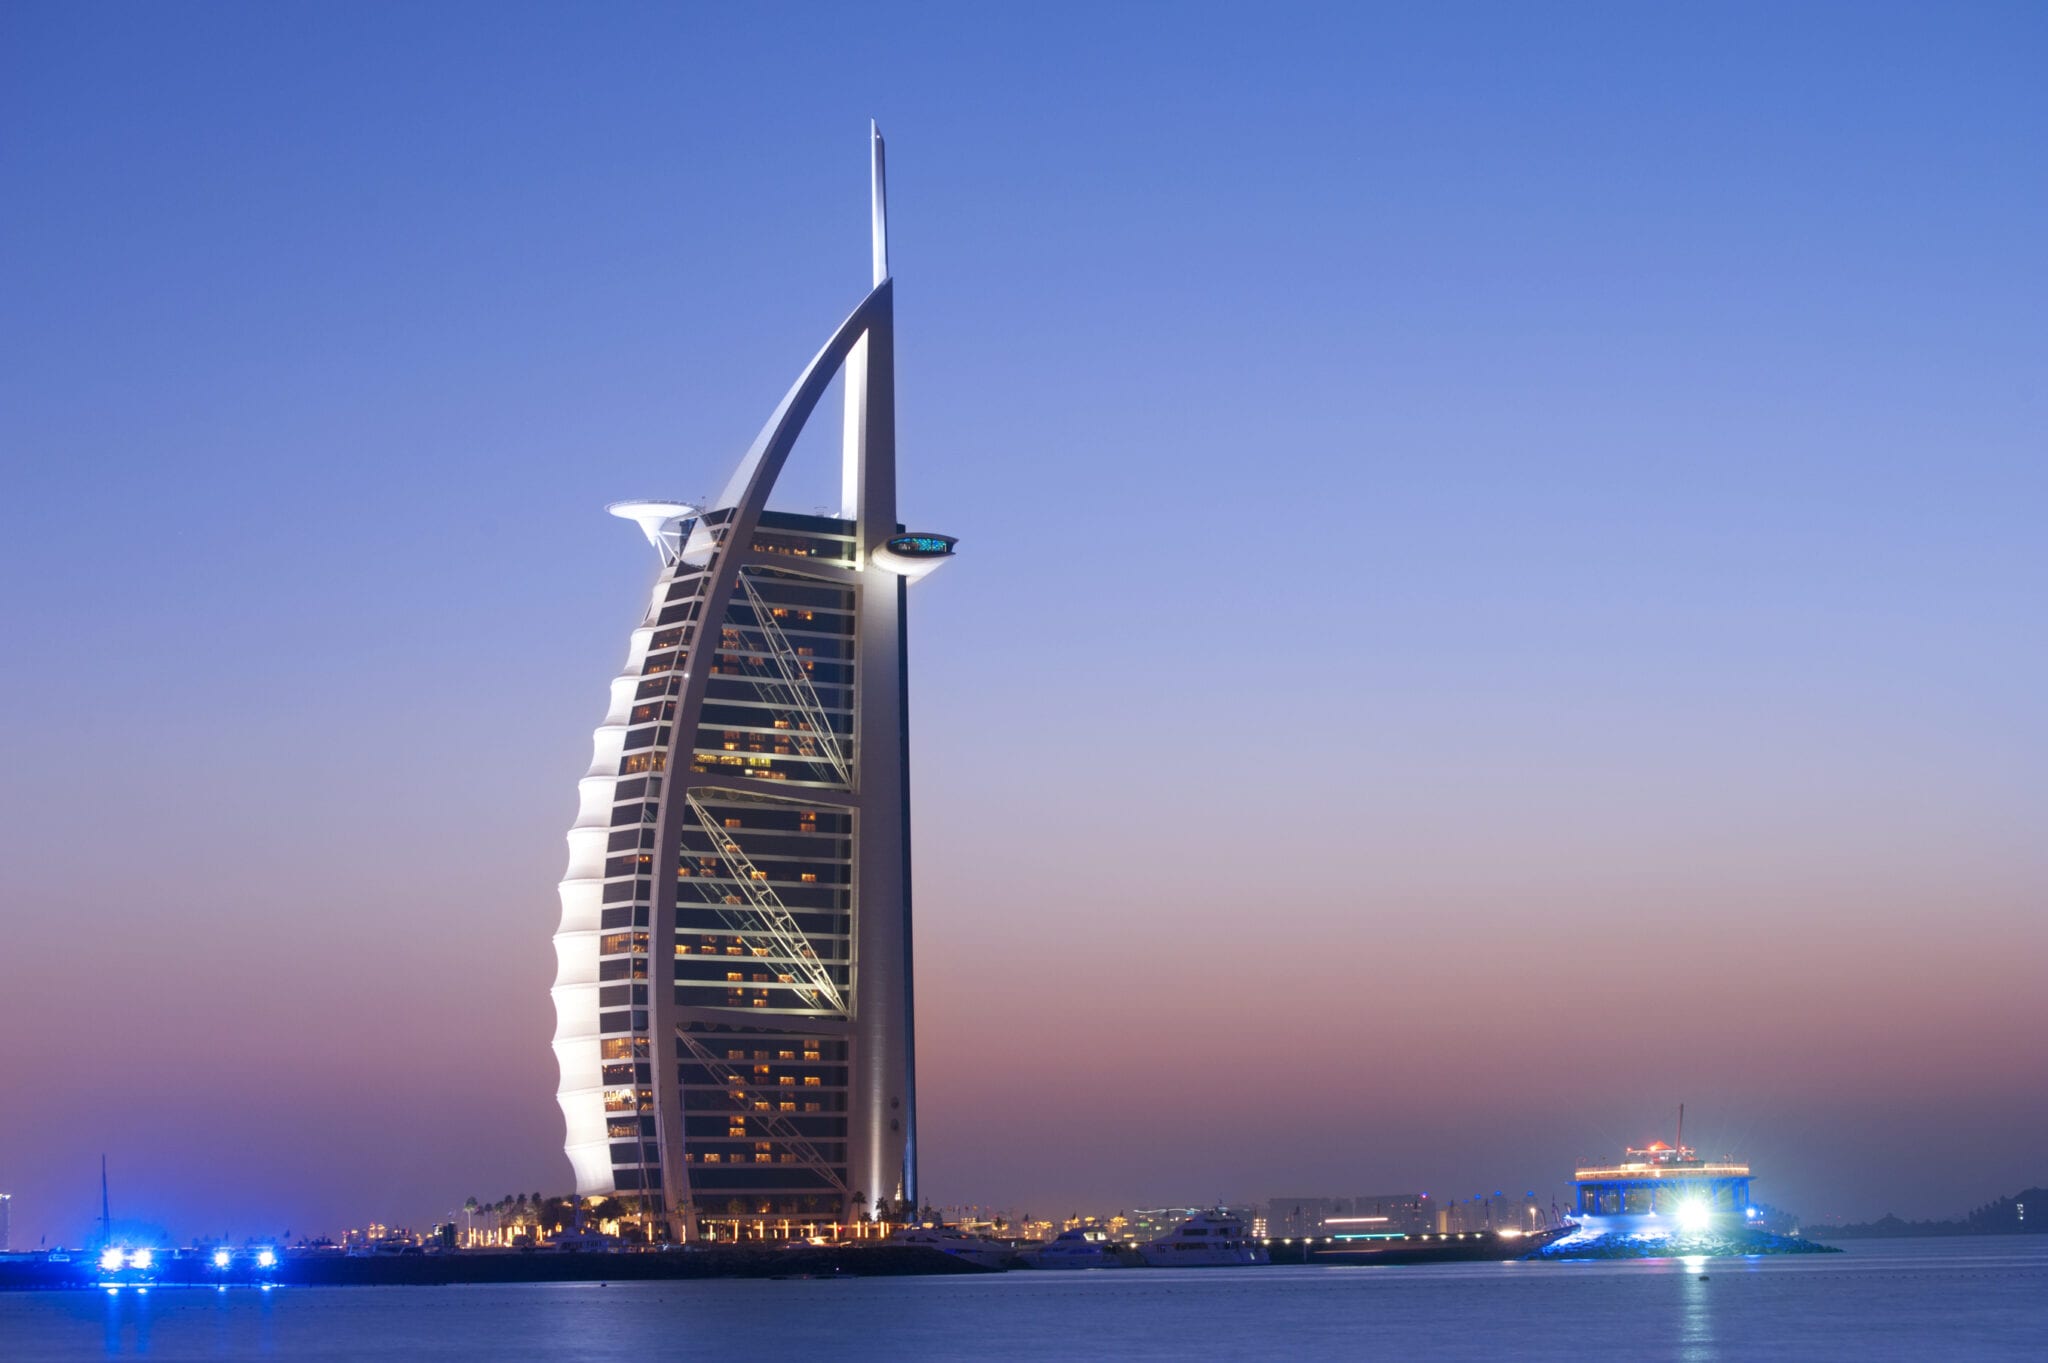 Burj Al Arab Hotel In Dubai United Arab Emirates 000019083530 Large 2048x1363 